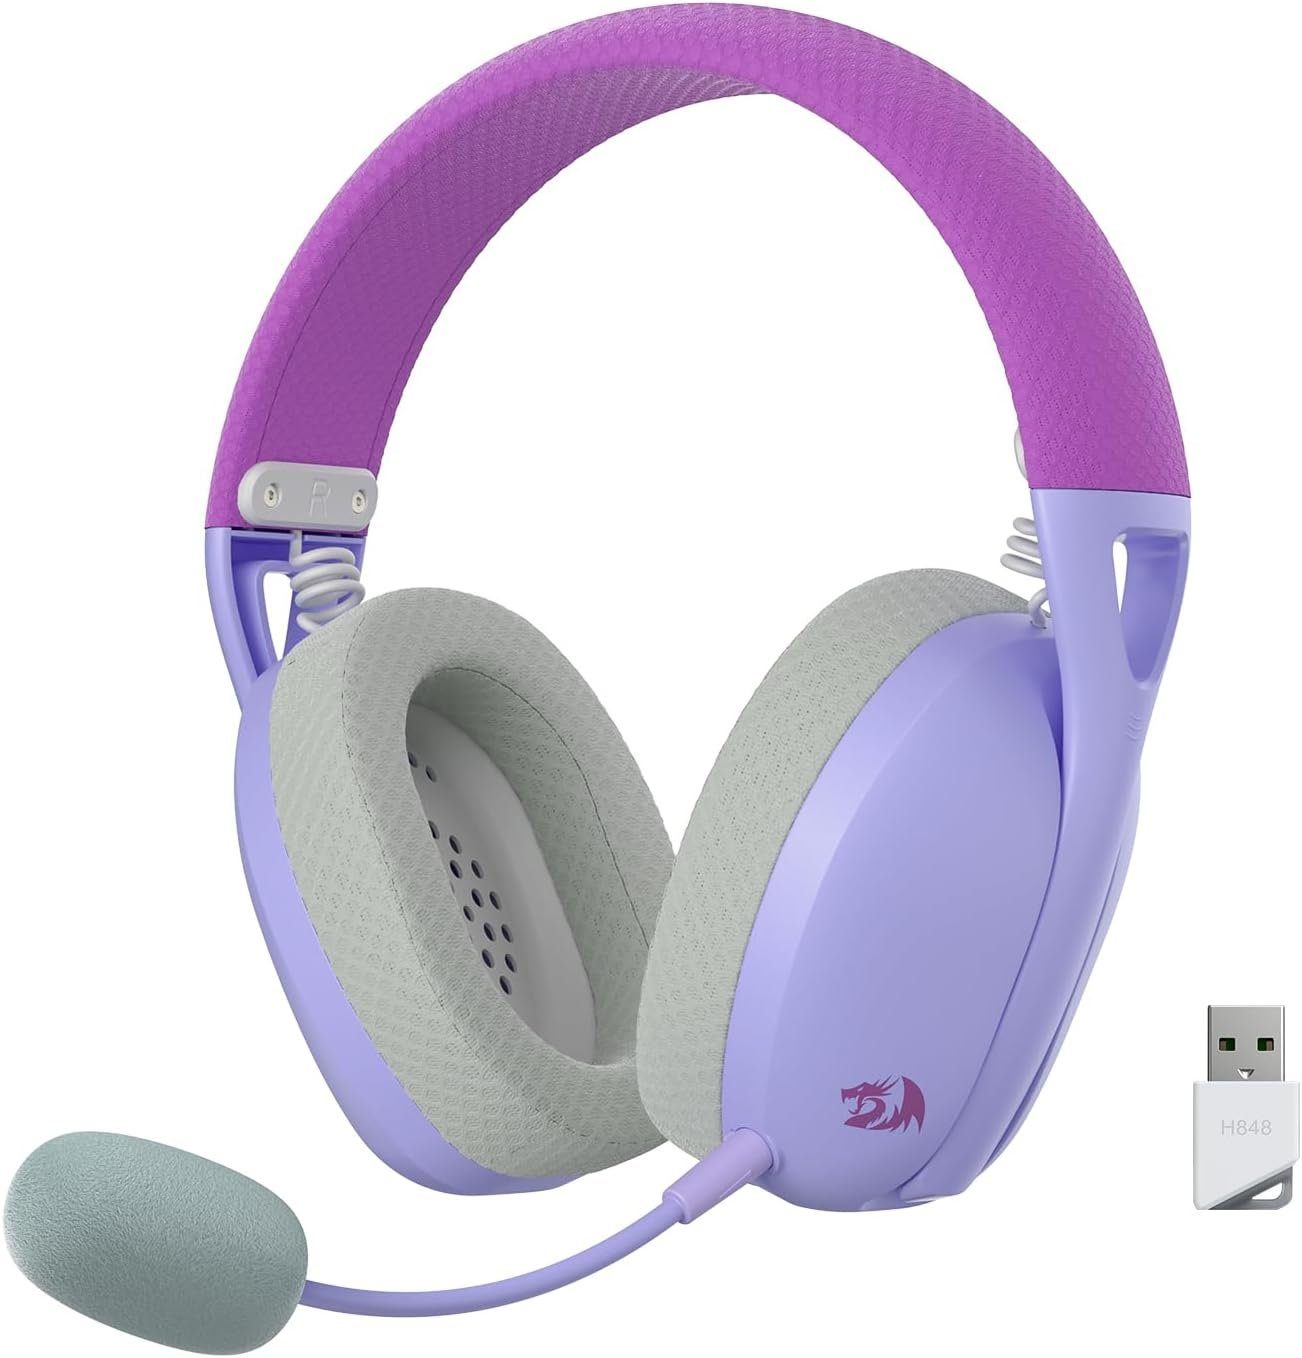 und Lila) Kommunikation, Gaming-Headset Headset Gaming in Ultimatives 7.1 Surround störungsfreie H848 Klare Redragon stilvollem (Noise-Cancelling-Mikrofon: